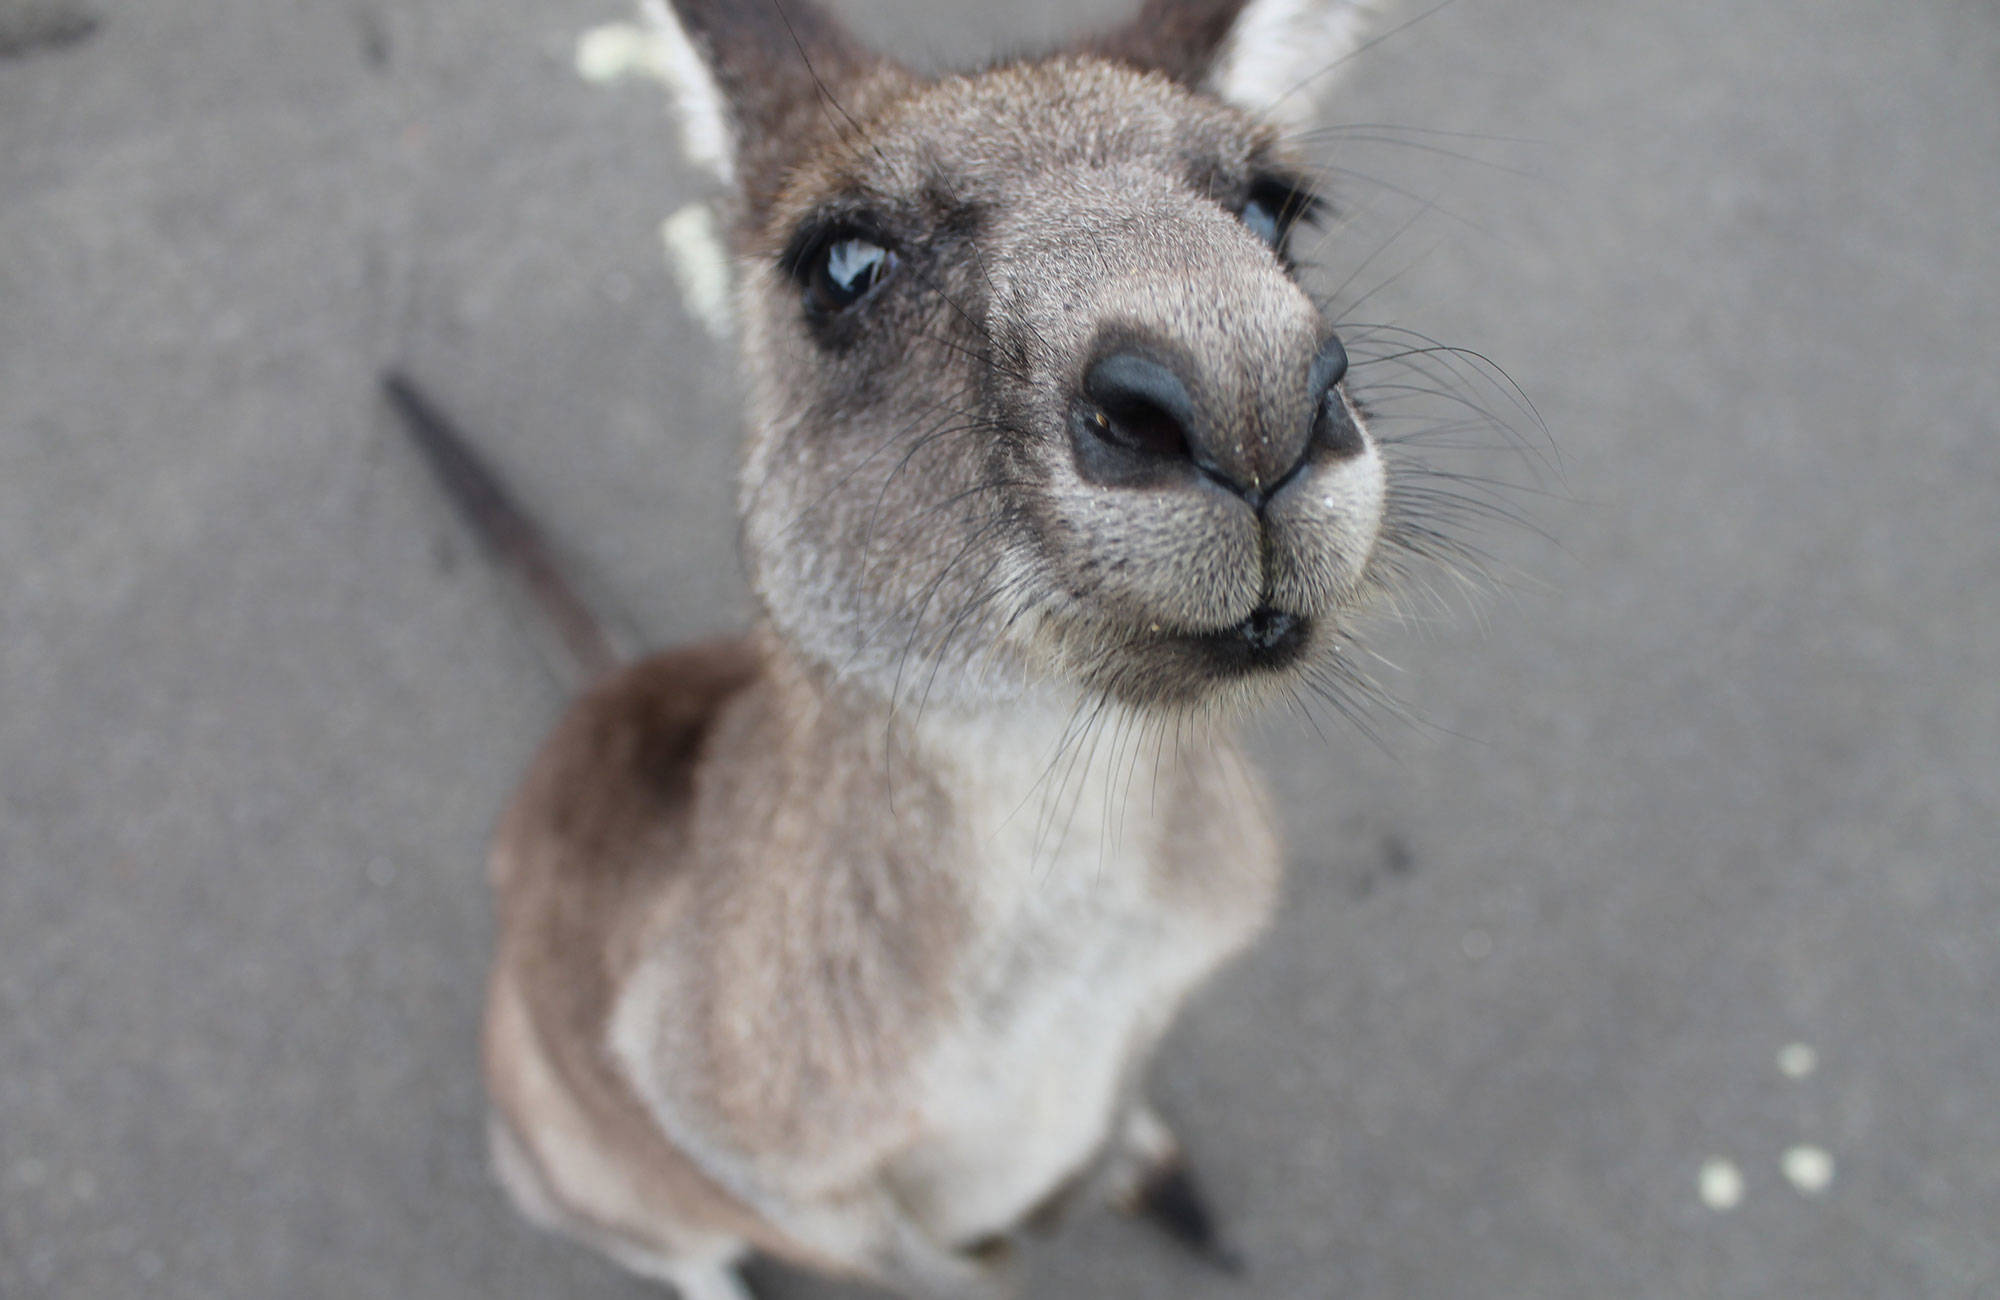 meet the kangaroos during your studies in australia